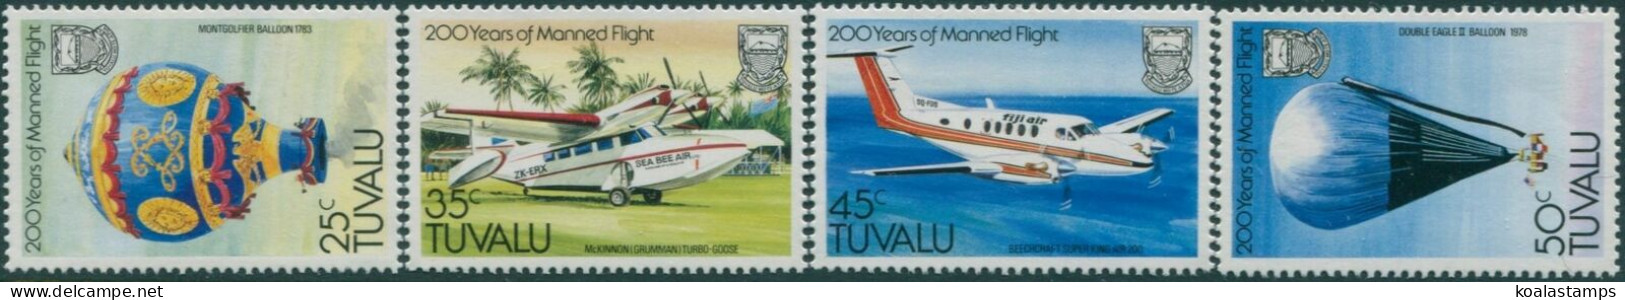 Tuvalu 1983 SG225-228 Manned Flight Set MNH - Tuvalu (fr. Elliceinseln)